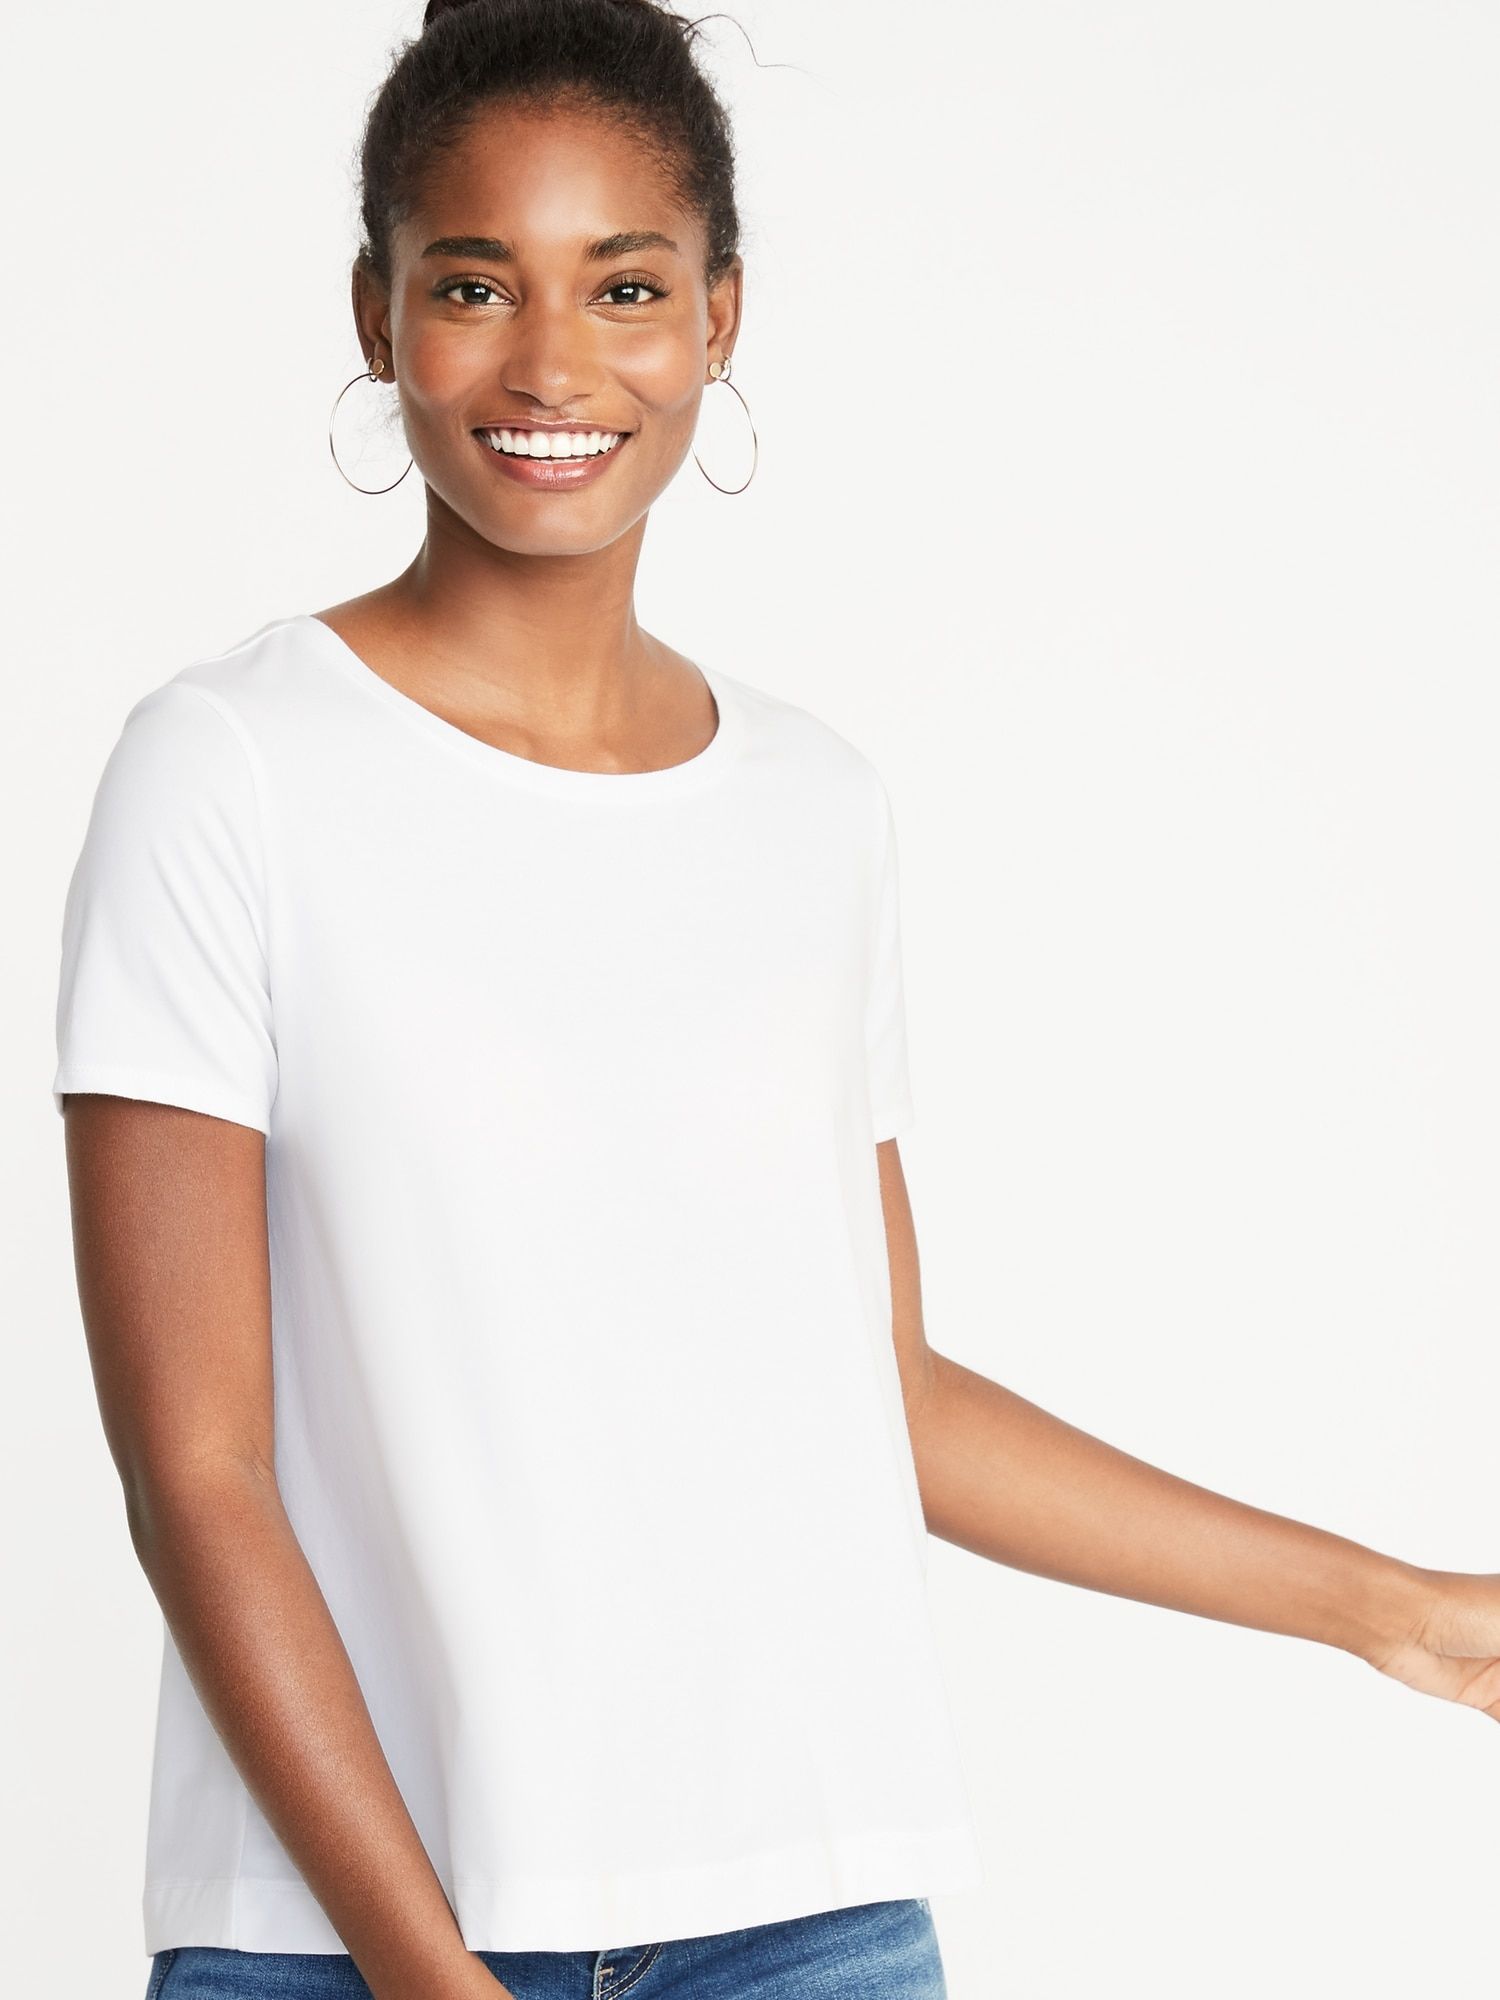 15 Best White T-Shirts 2020 - Cute 